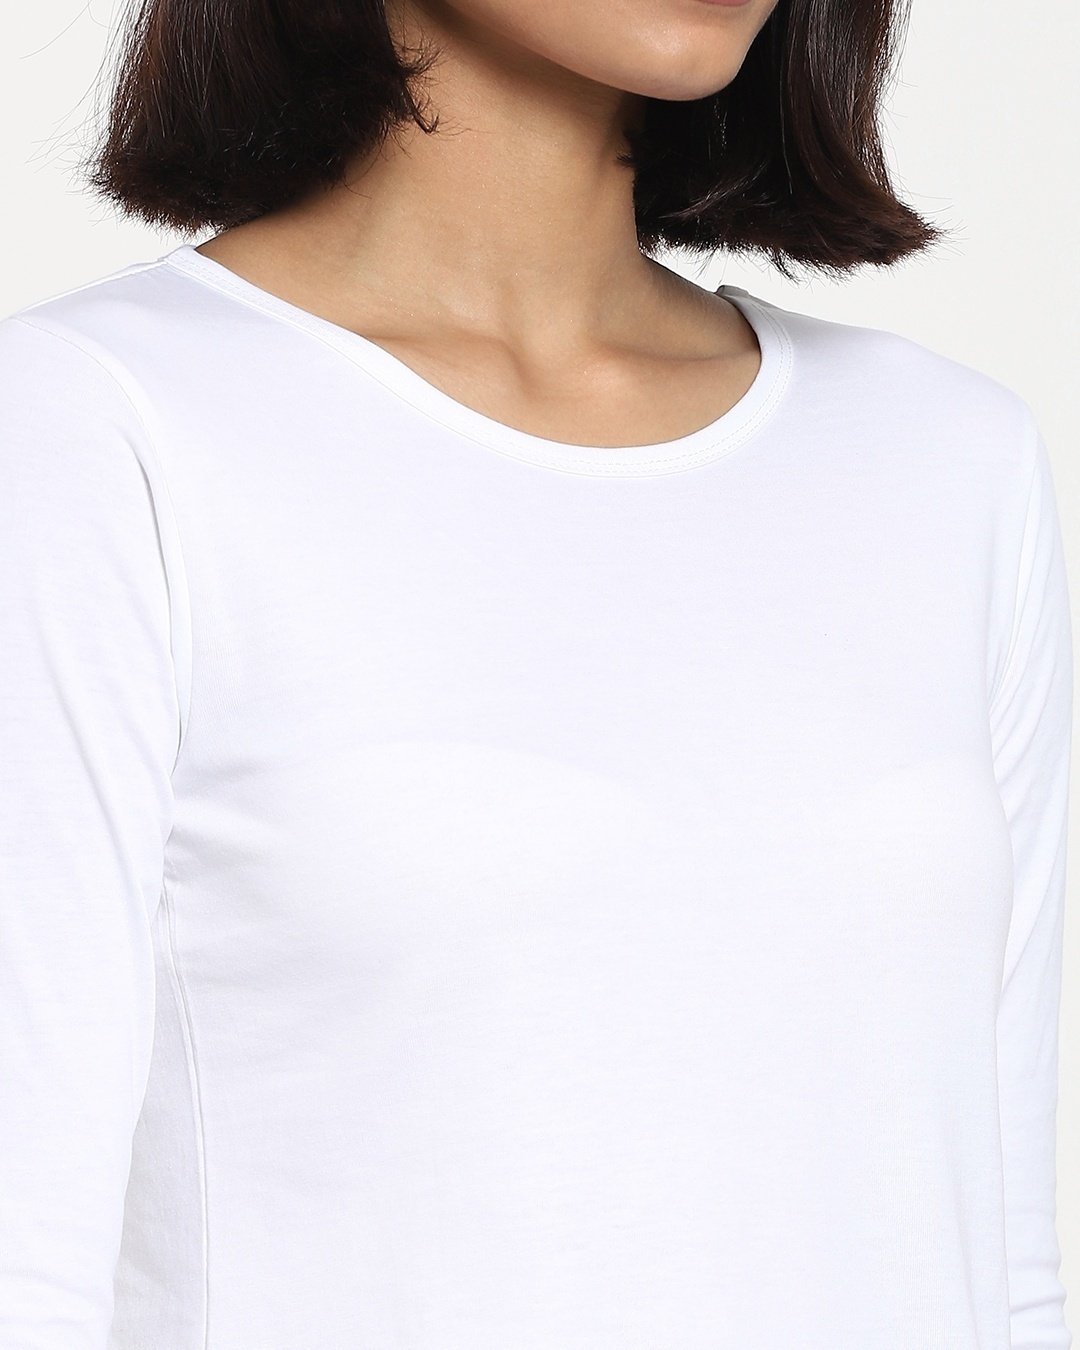 Shop White Round Neck 3/4th Sleeve T-Shirt